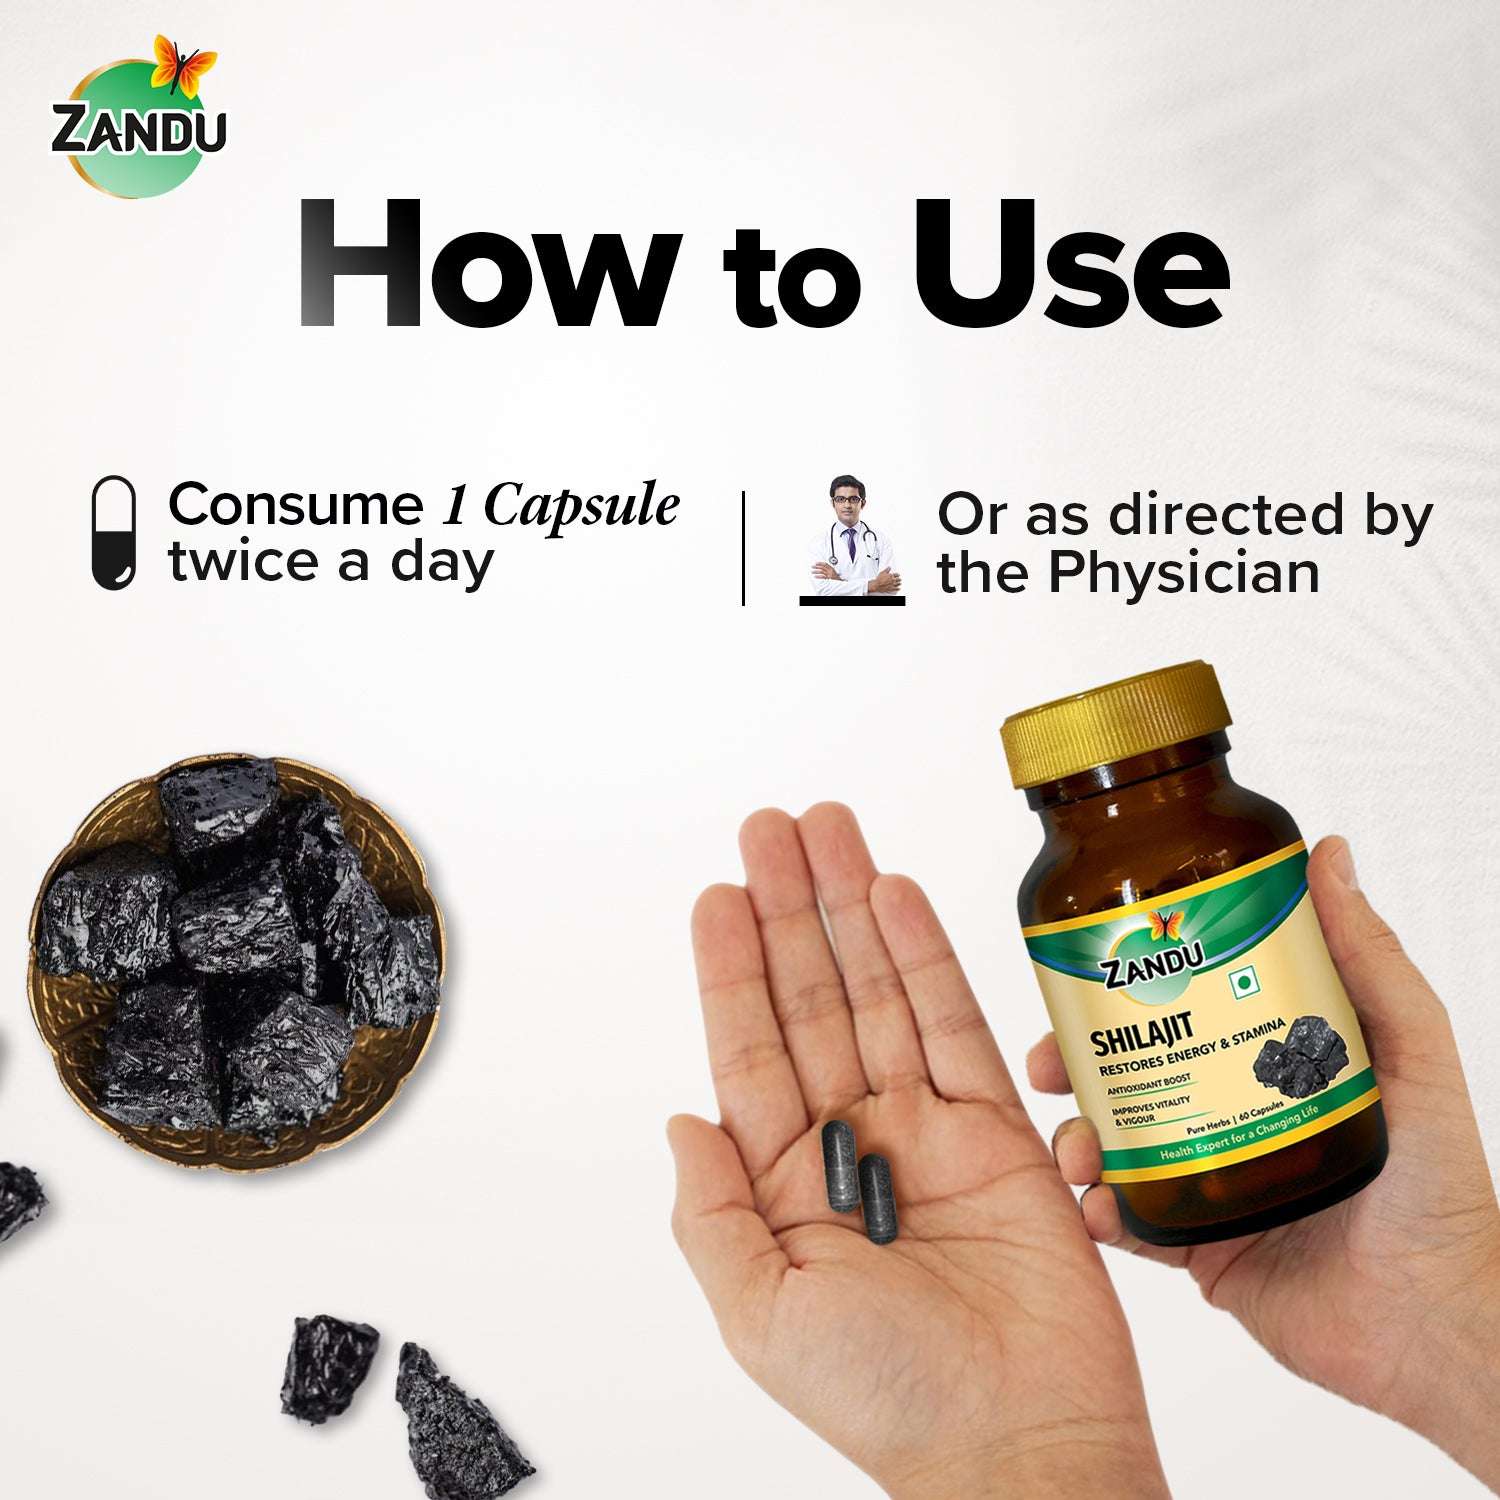 How to use Zandu Shilajit